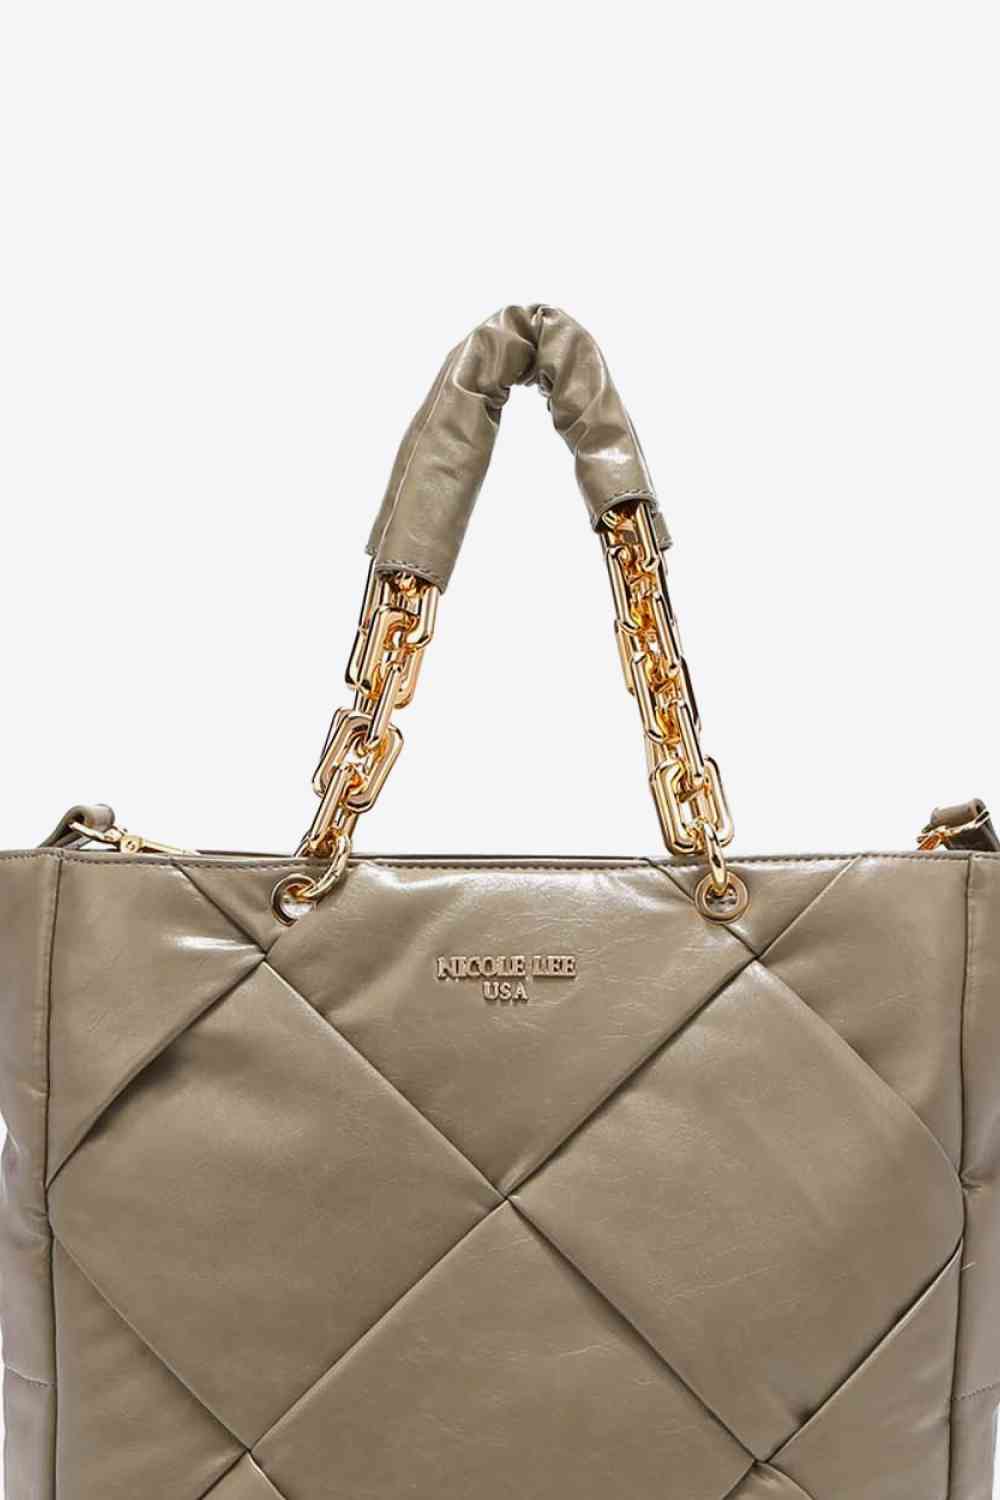 White Smoke Nicole Lee USA Mesmerize Handbag Sentient Beauty Fashions *Accessories